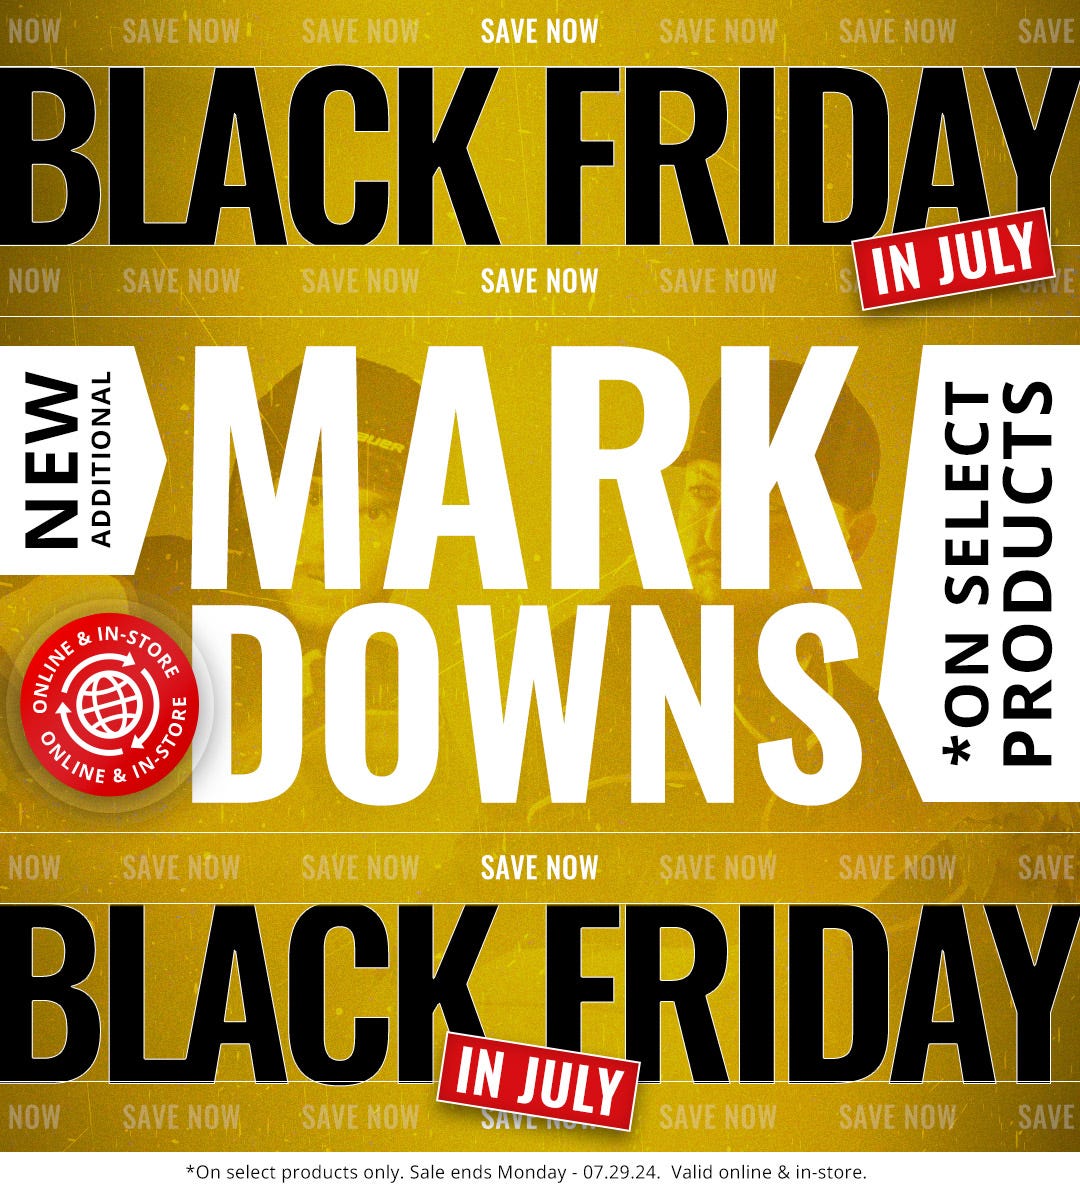 Black Friday in July Sale